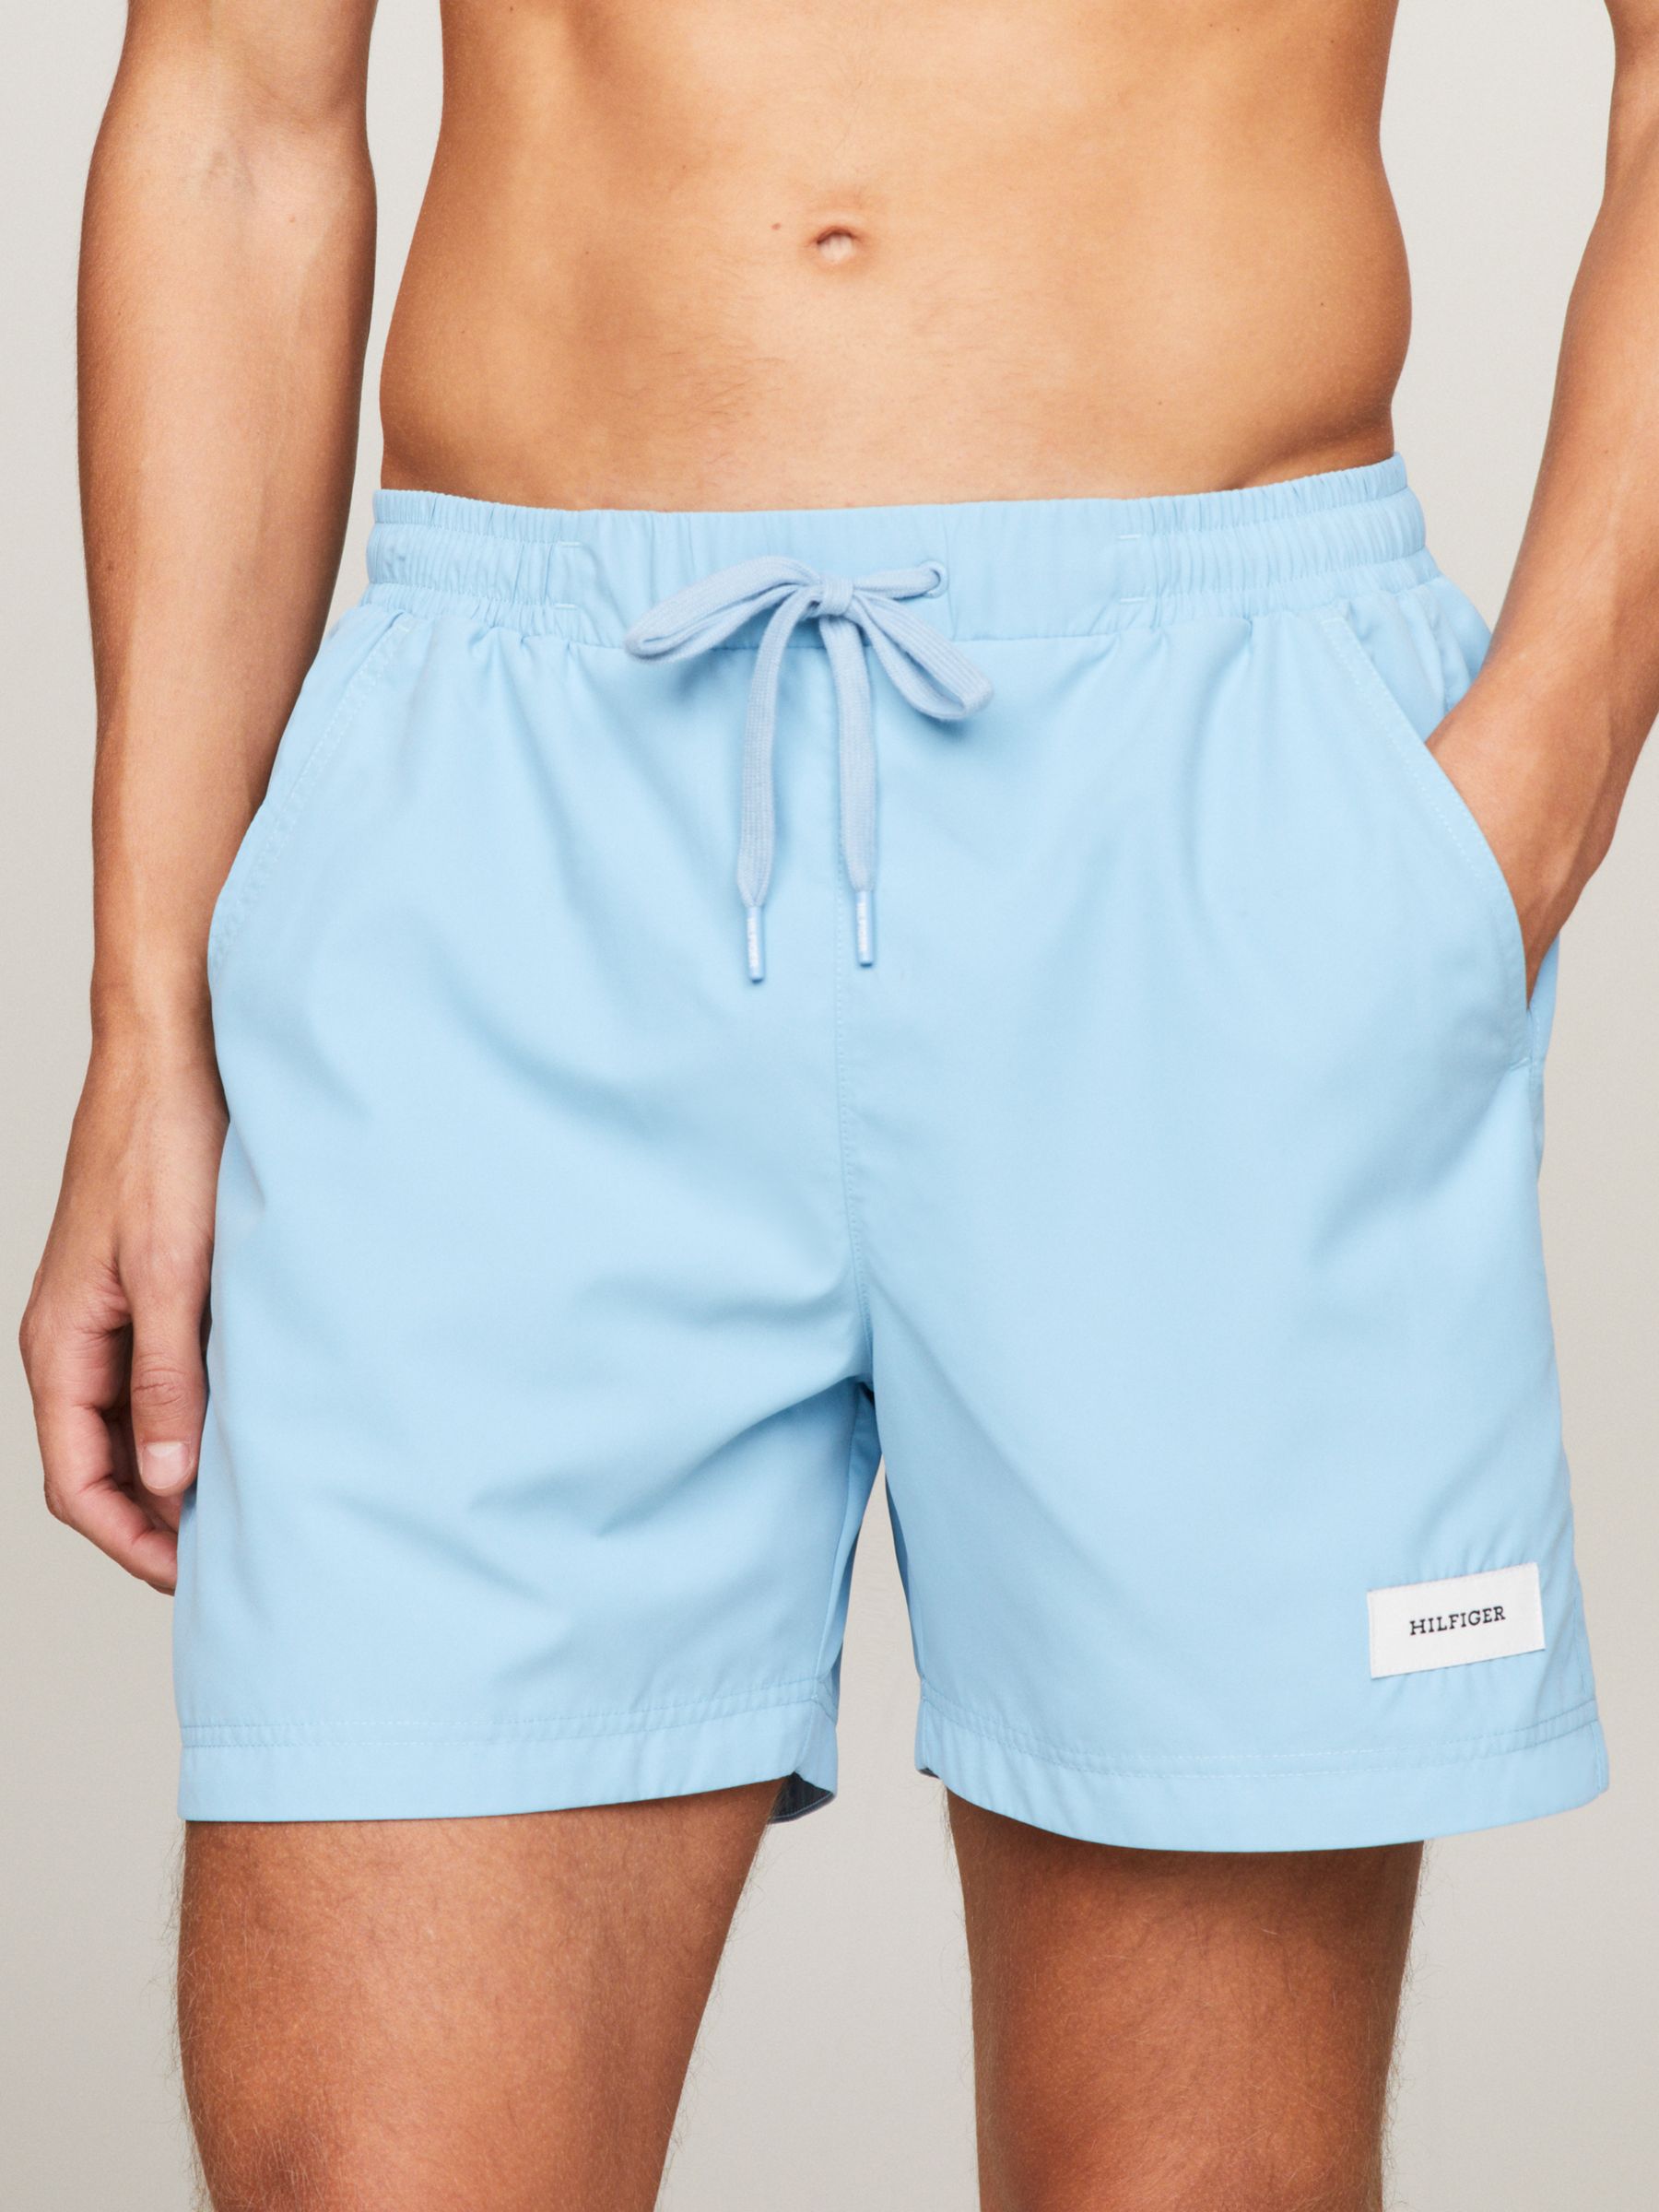 Tommy Hilfiger Drawstring Label Swim Shorts, Blue, L